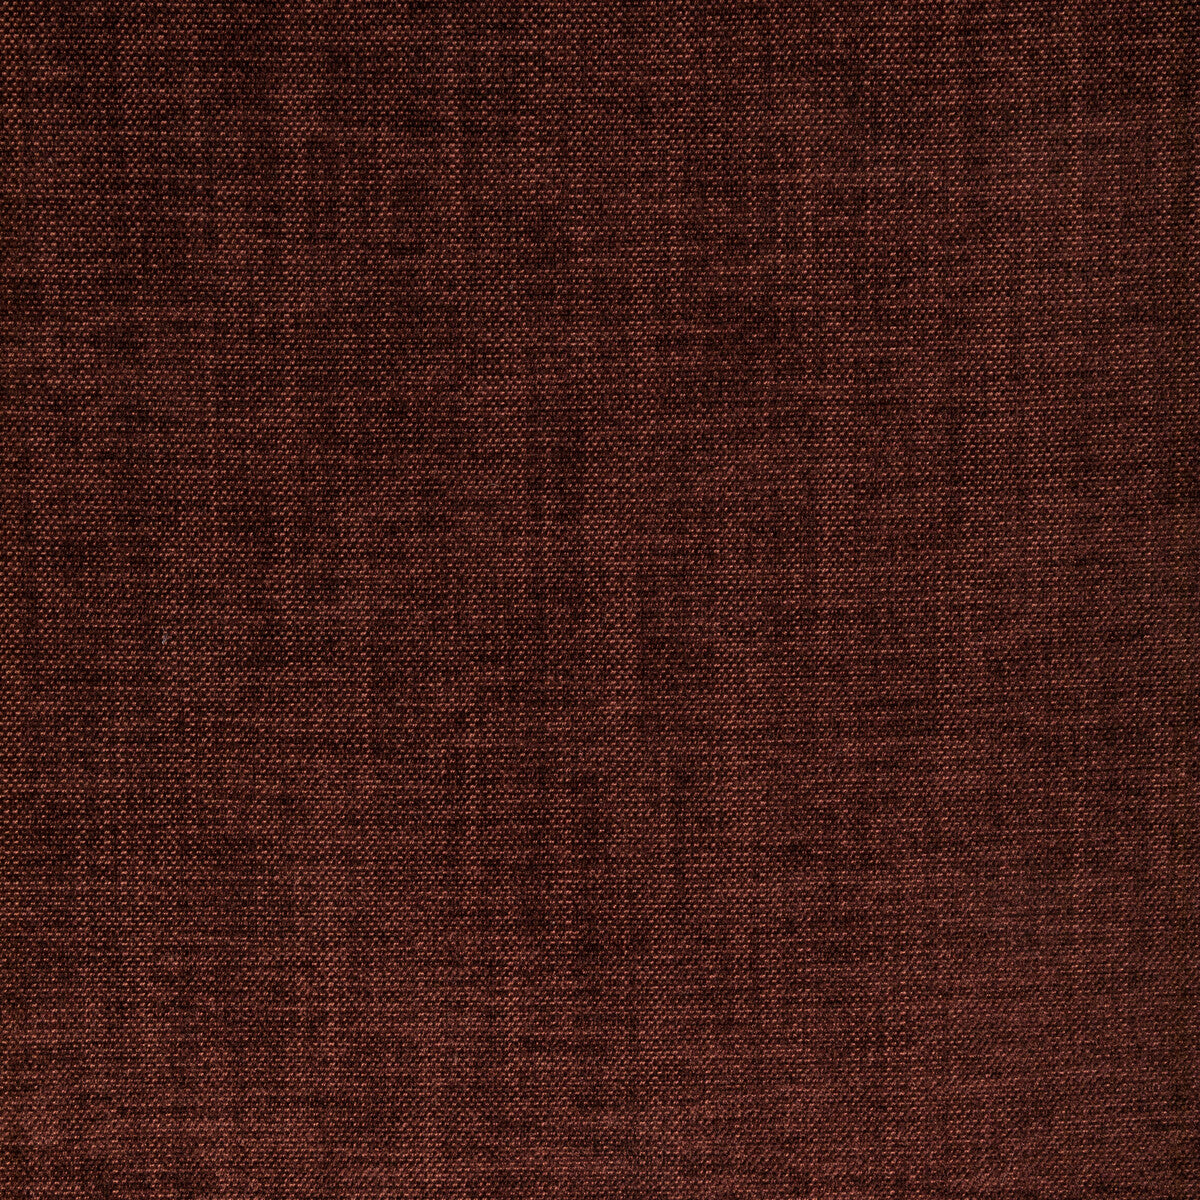 Kravet Smart fabric in 36650-9 color - pattern 36650.9.0 - by Kravet Smart in the Performance Kravetarmor collection